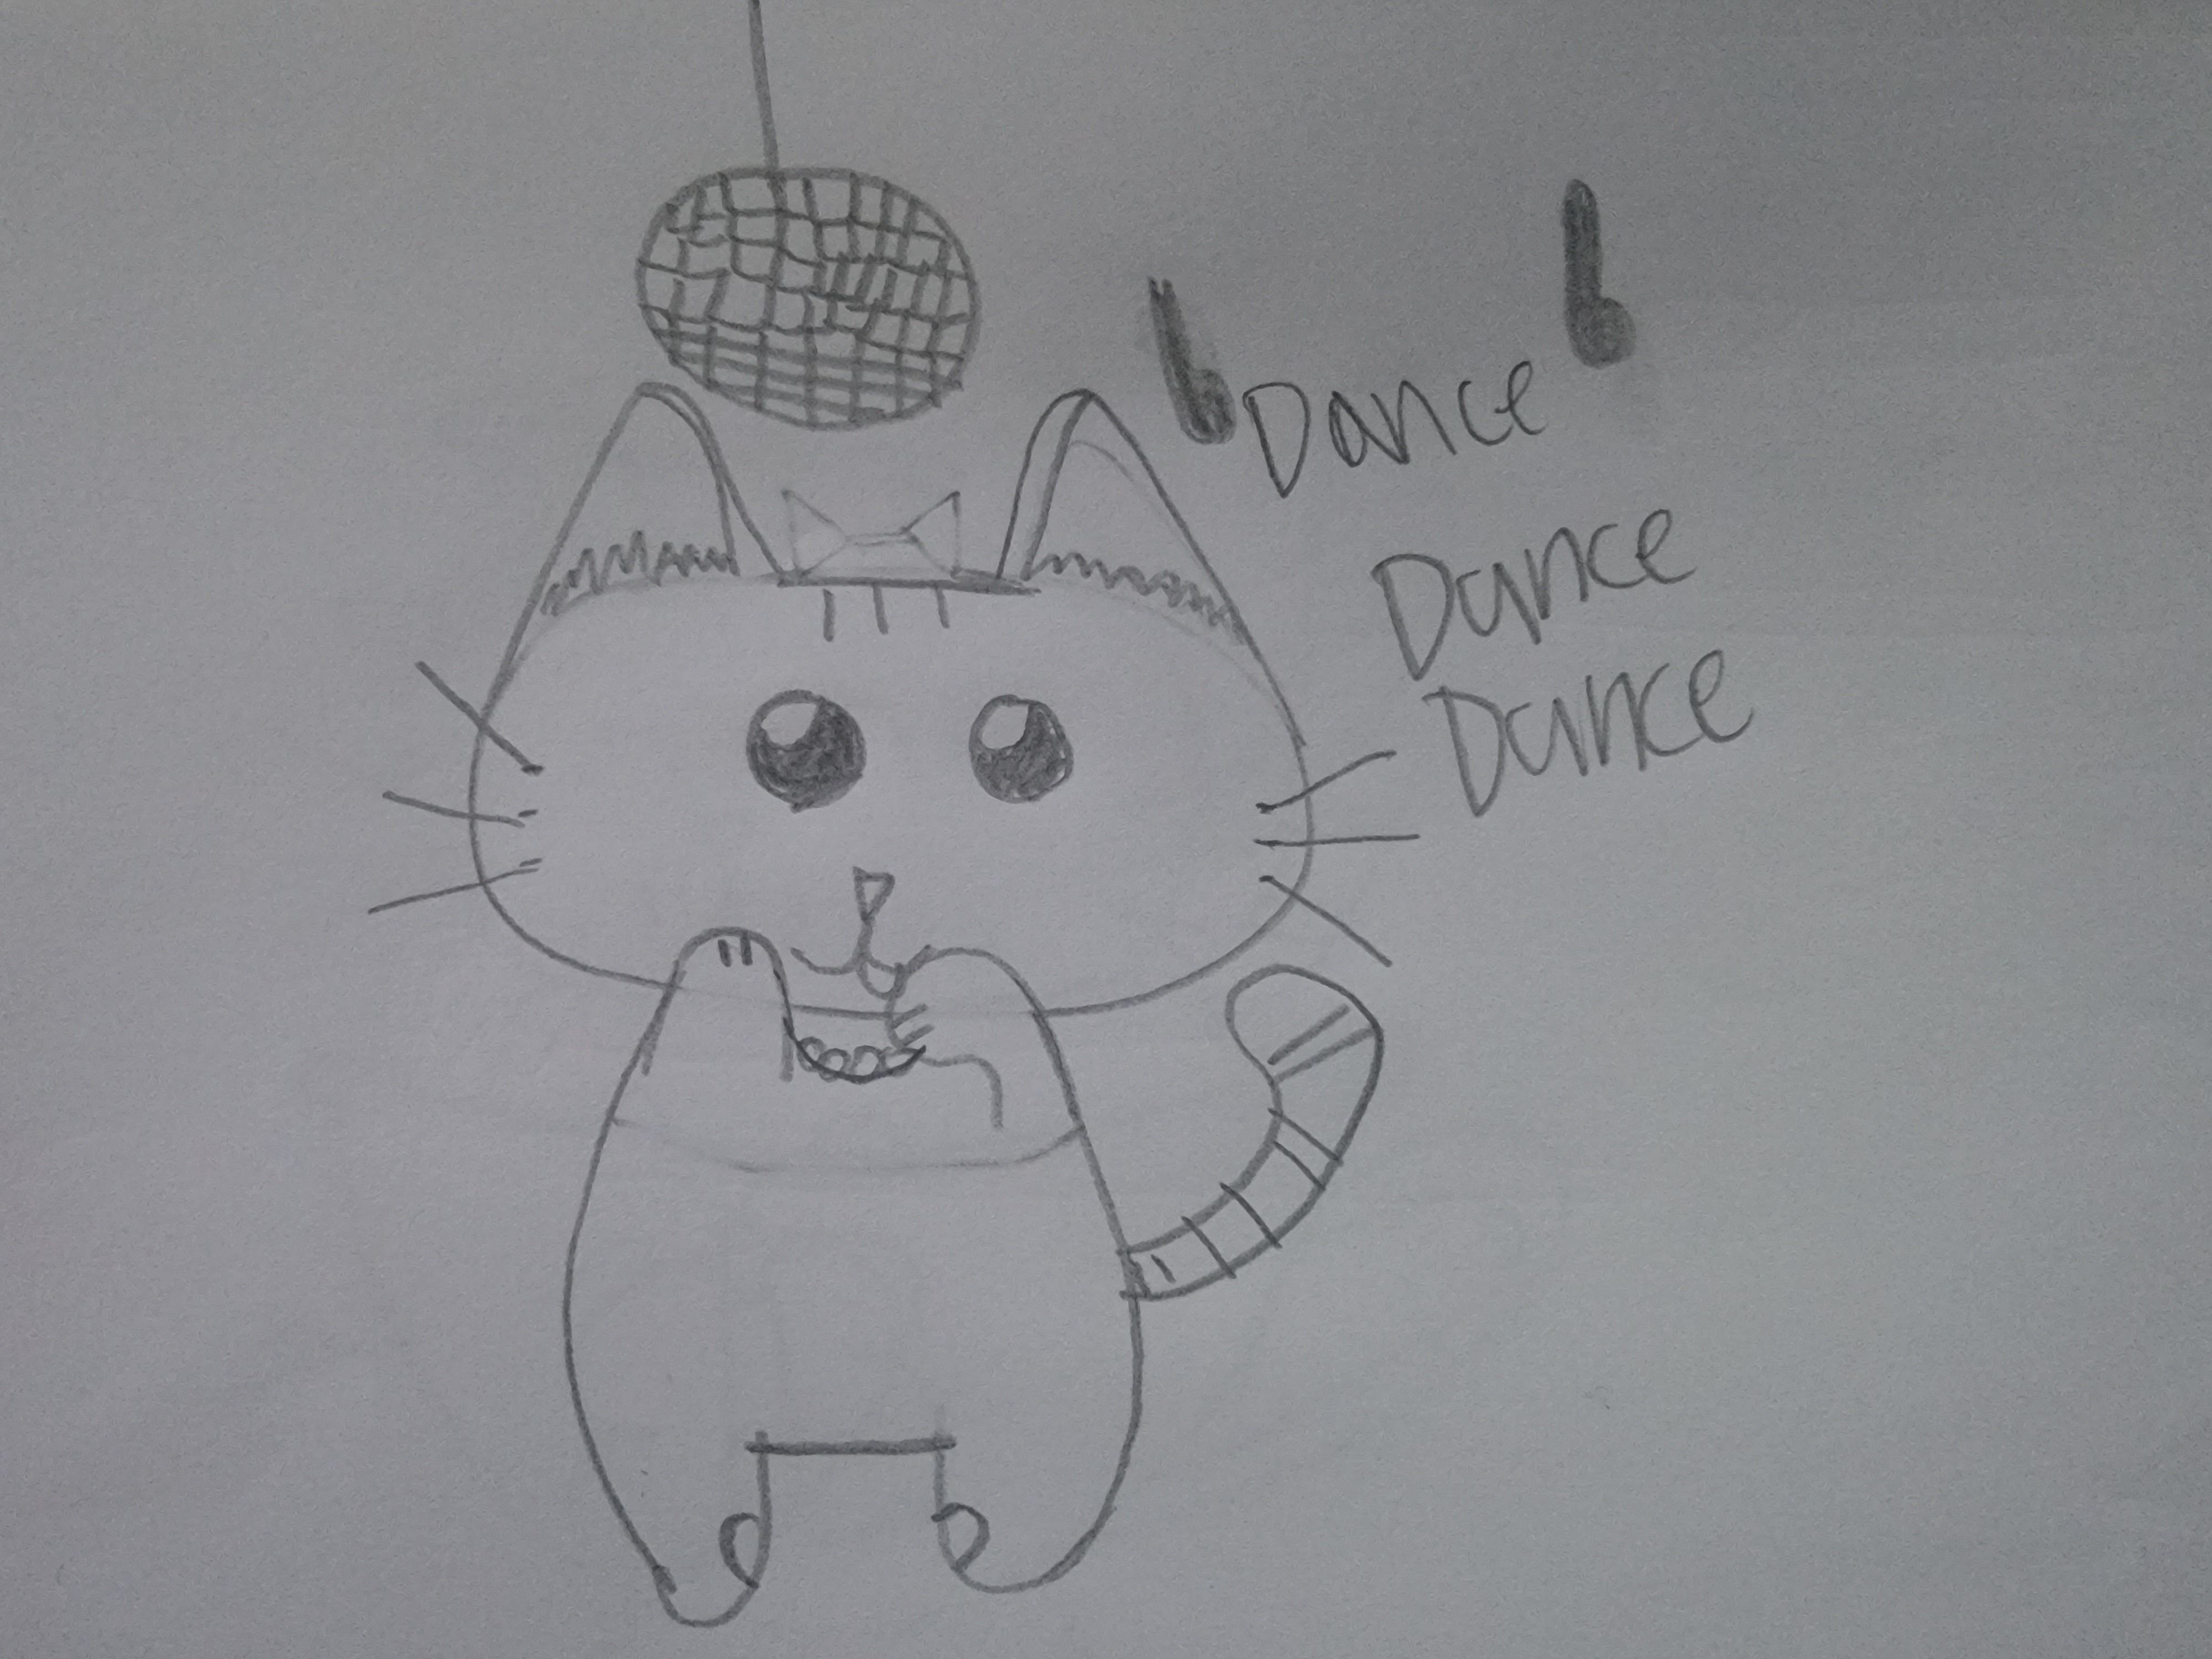 Let's Draw Kawaii Cats!